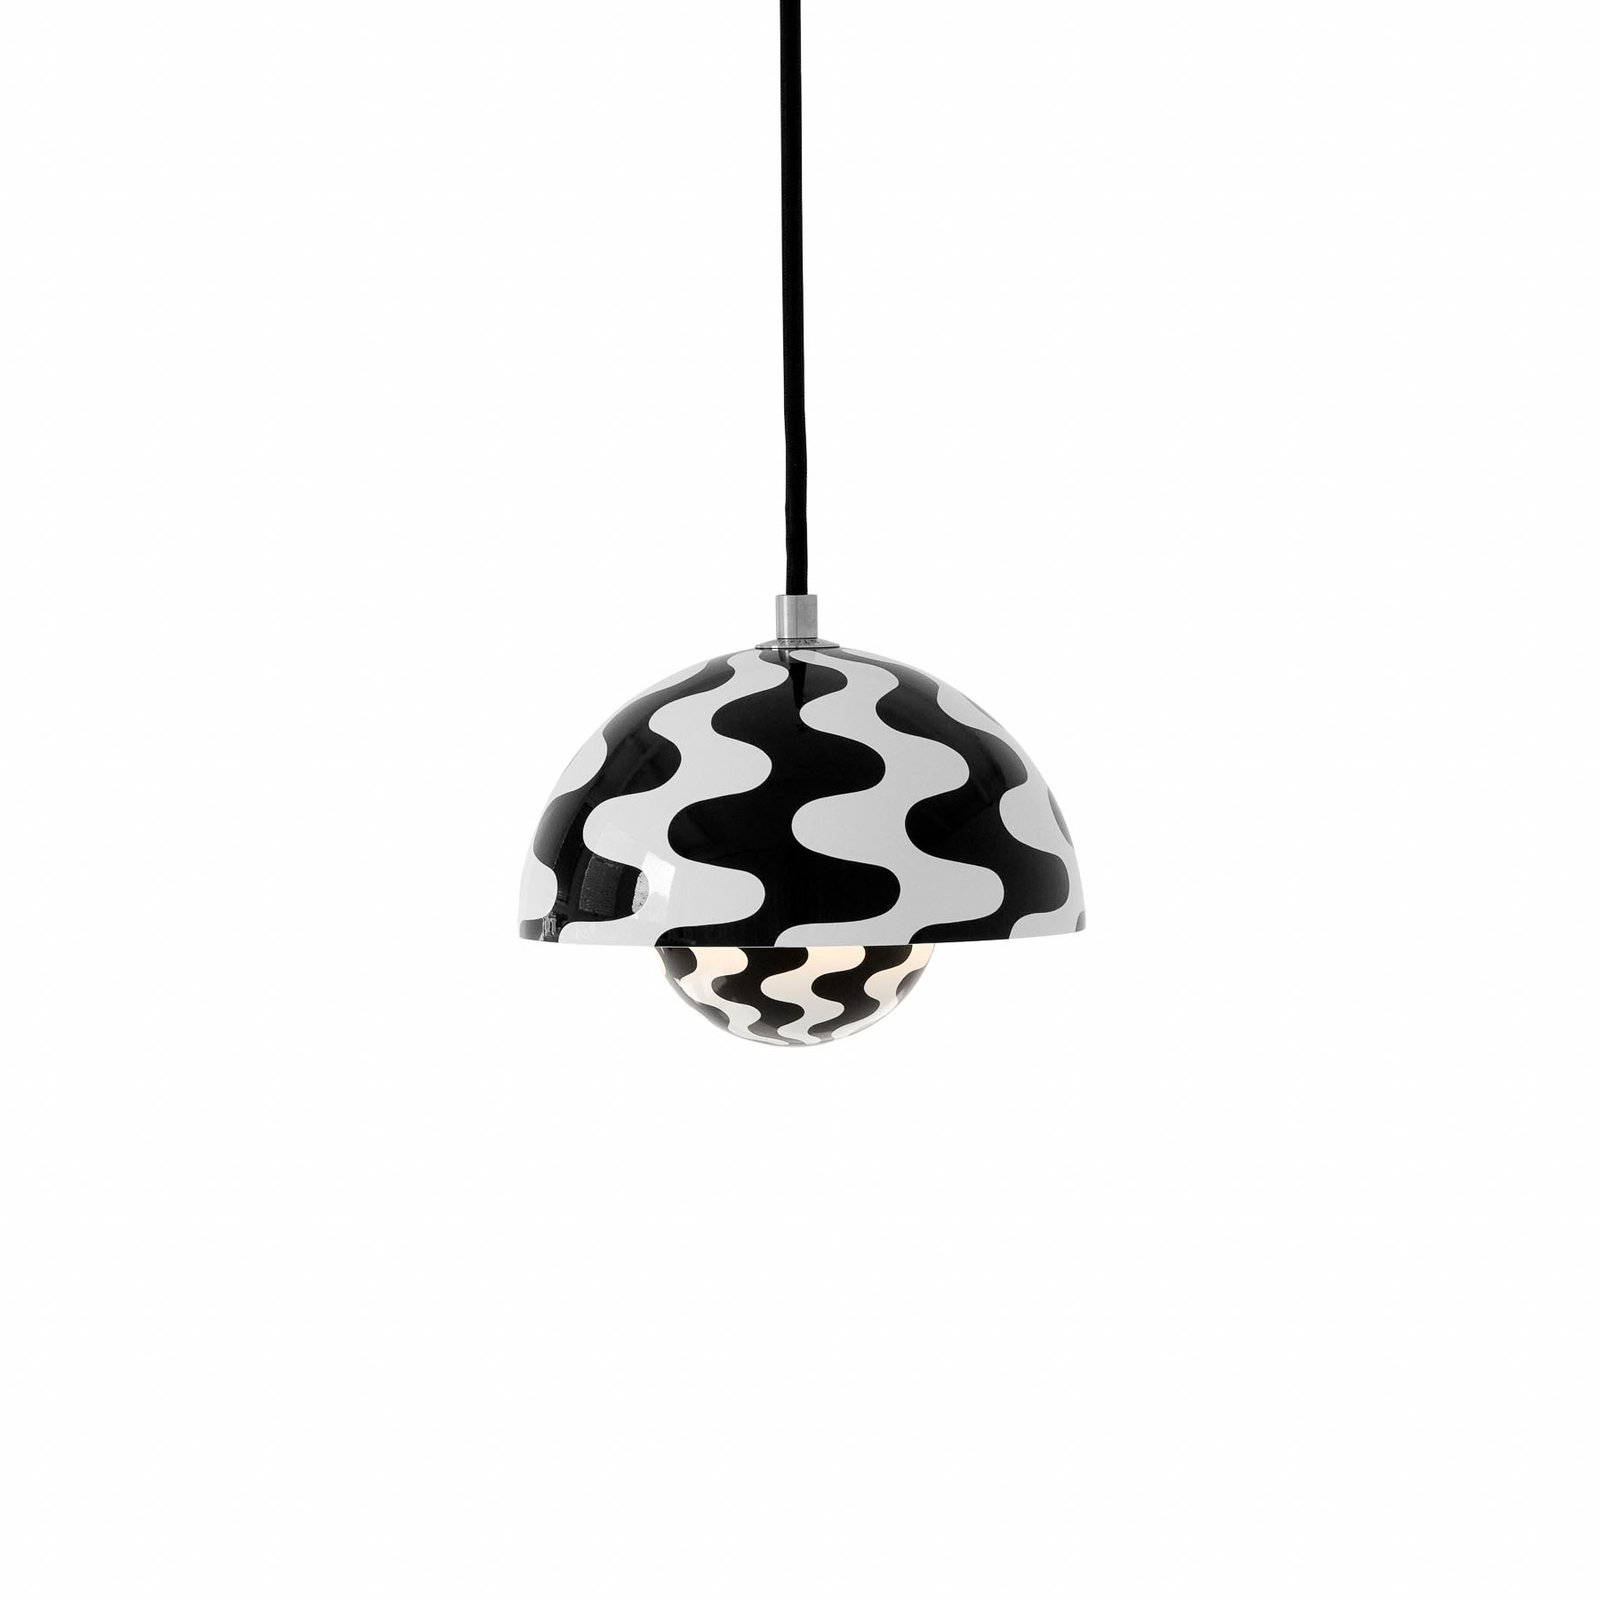 &Tradition hanglamp Flowerpot VP10, Ø 16cm, zwart/wit